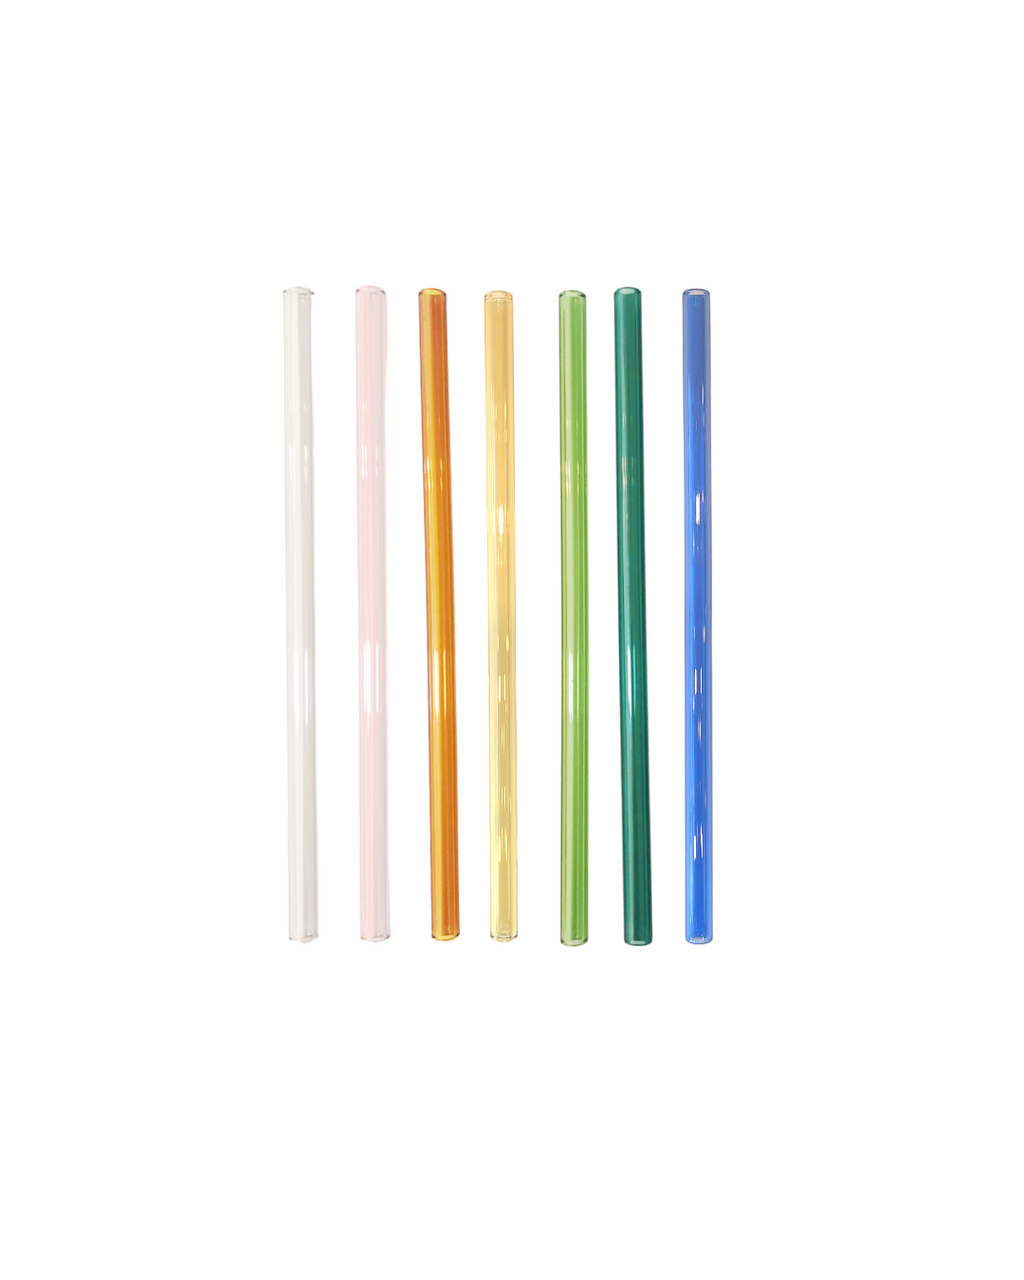 Glass Smoothie Straws – The Sunshine Series